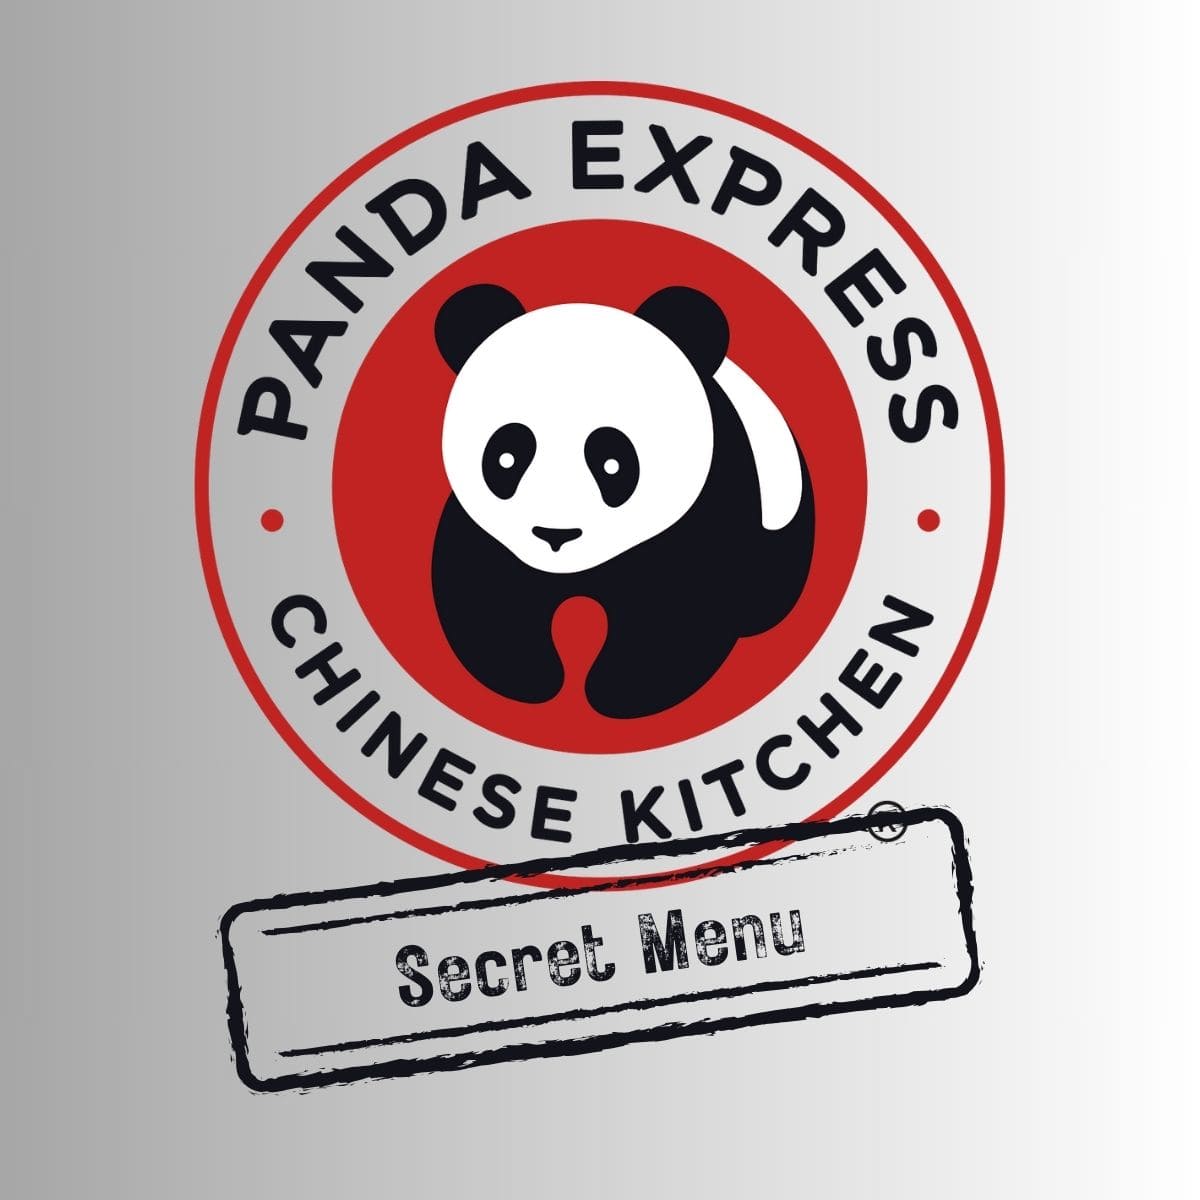 Panda Express Secret Menu